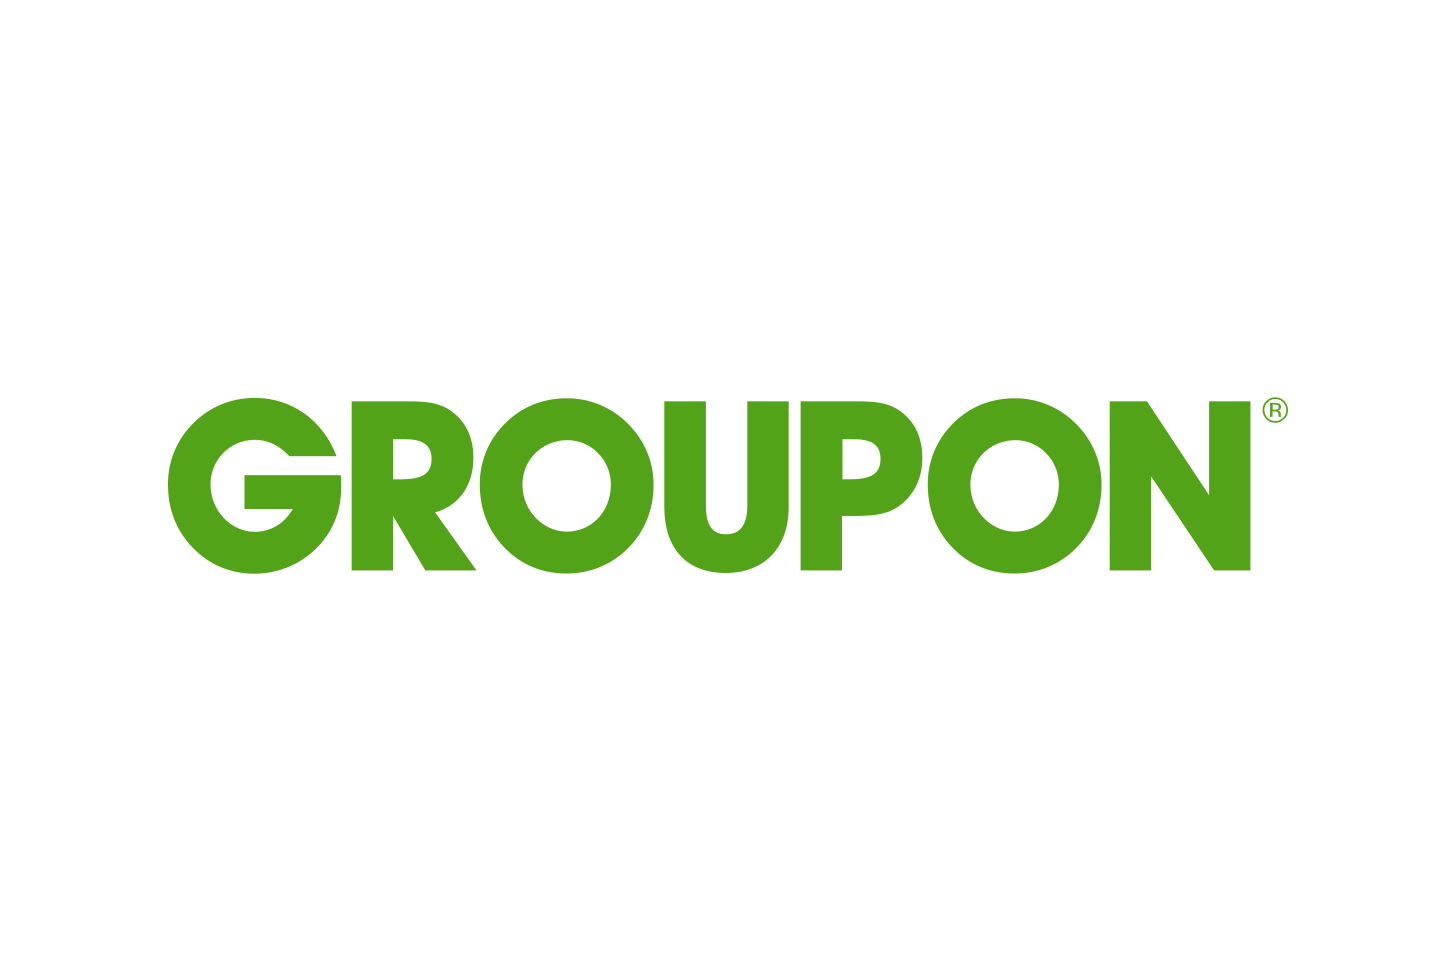 Download Groupon Logo in SVG Vector or PNG File Format - Logo.wine